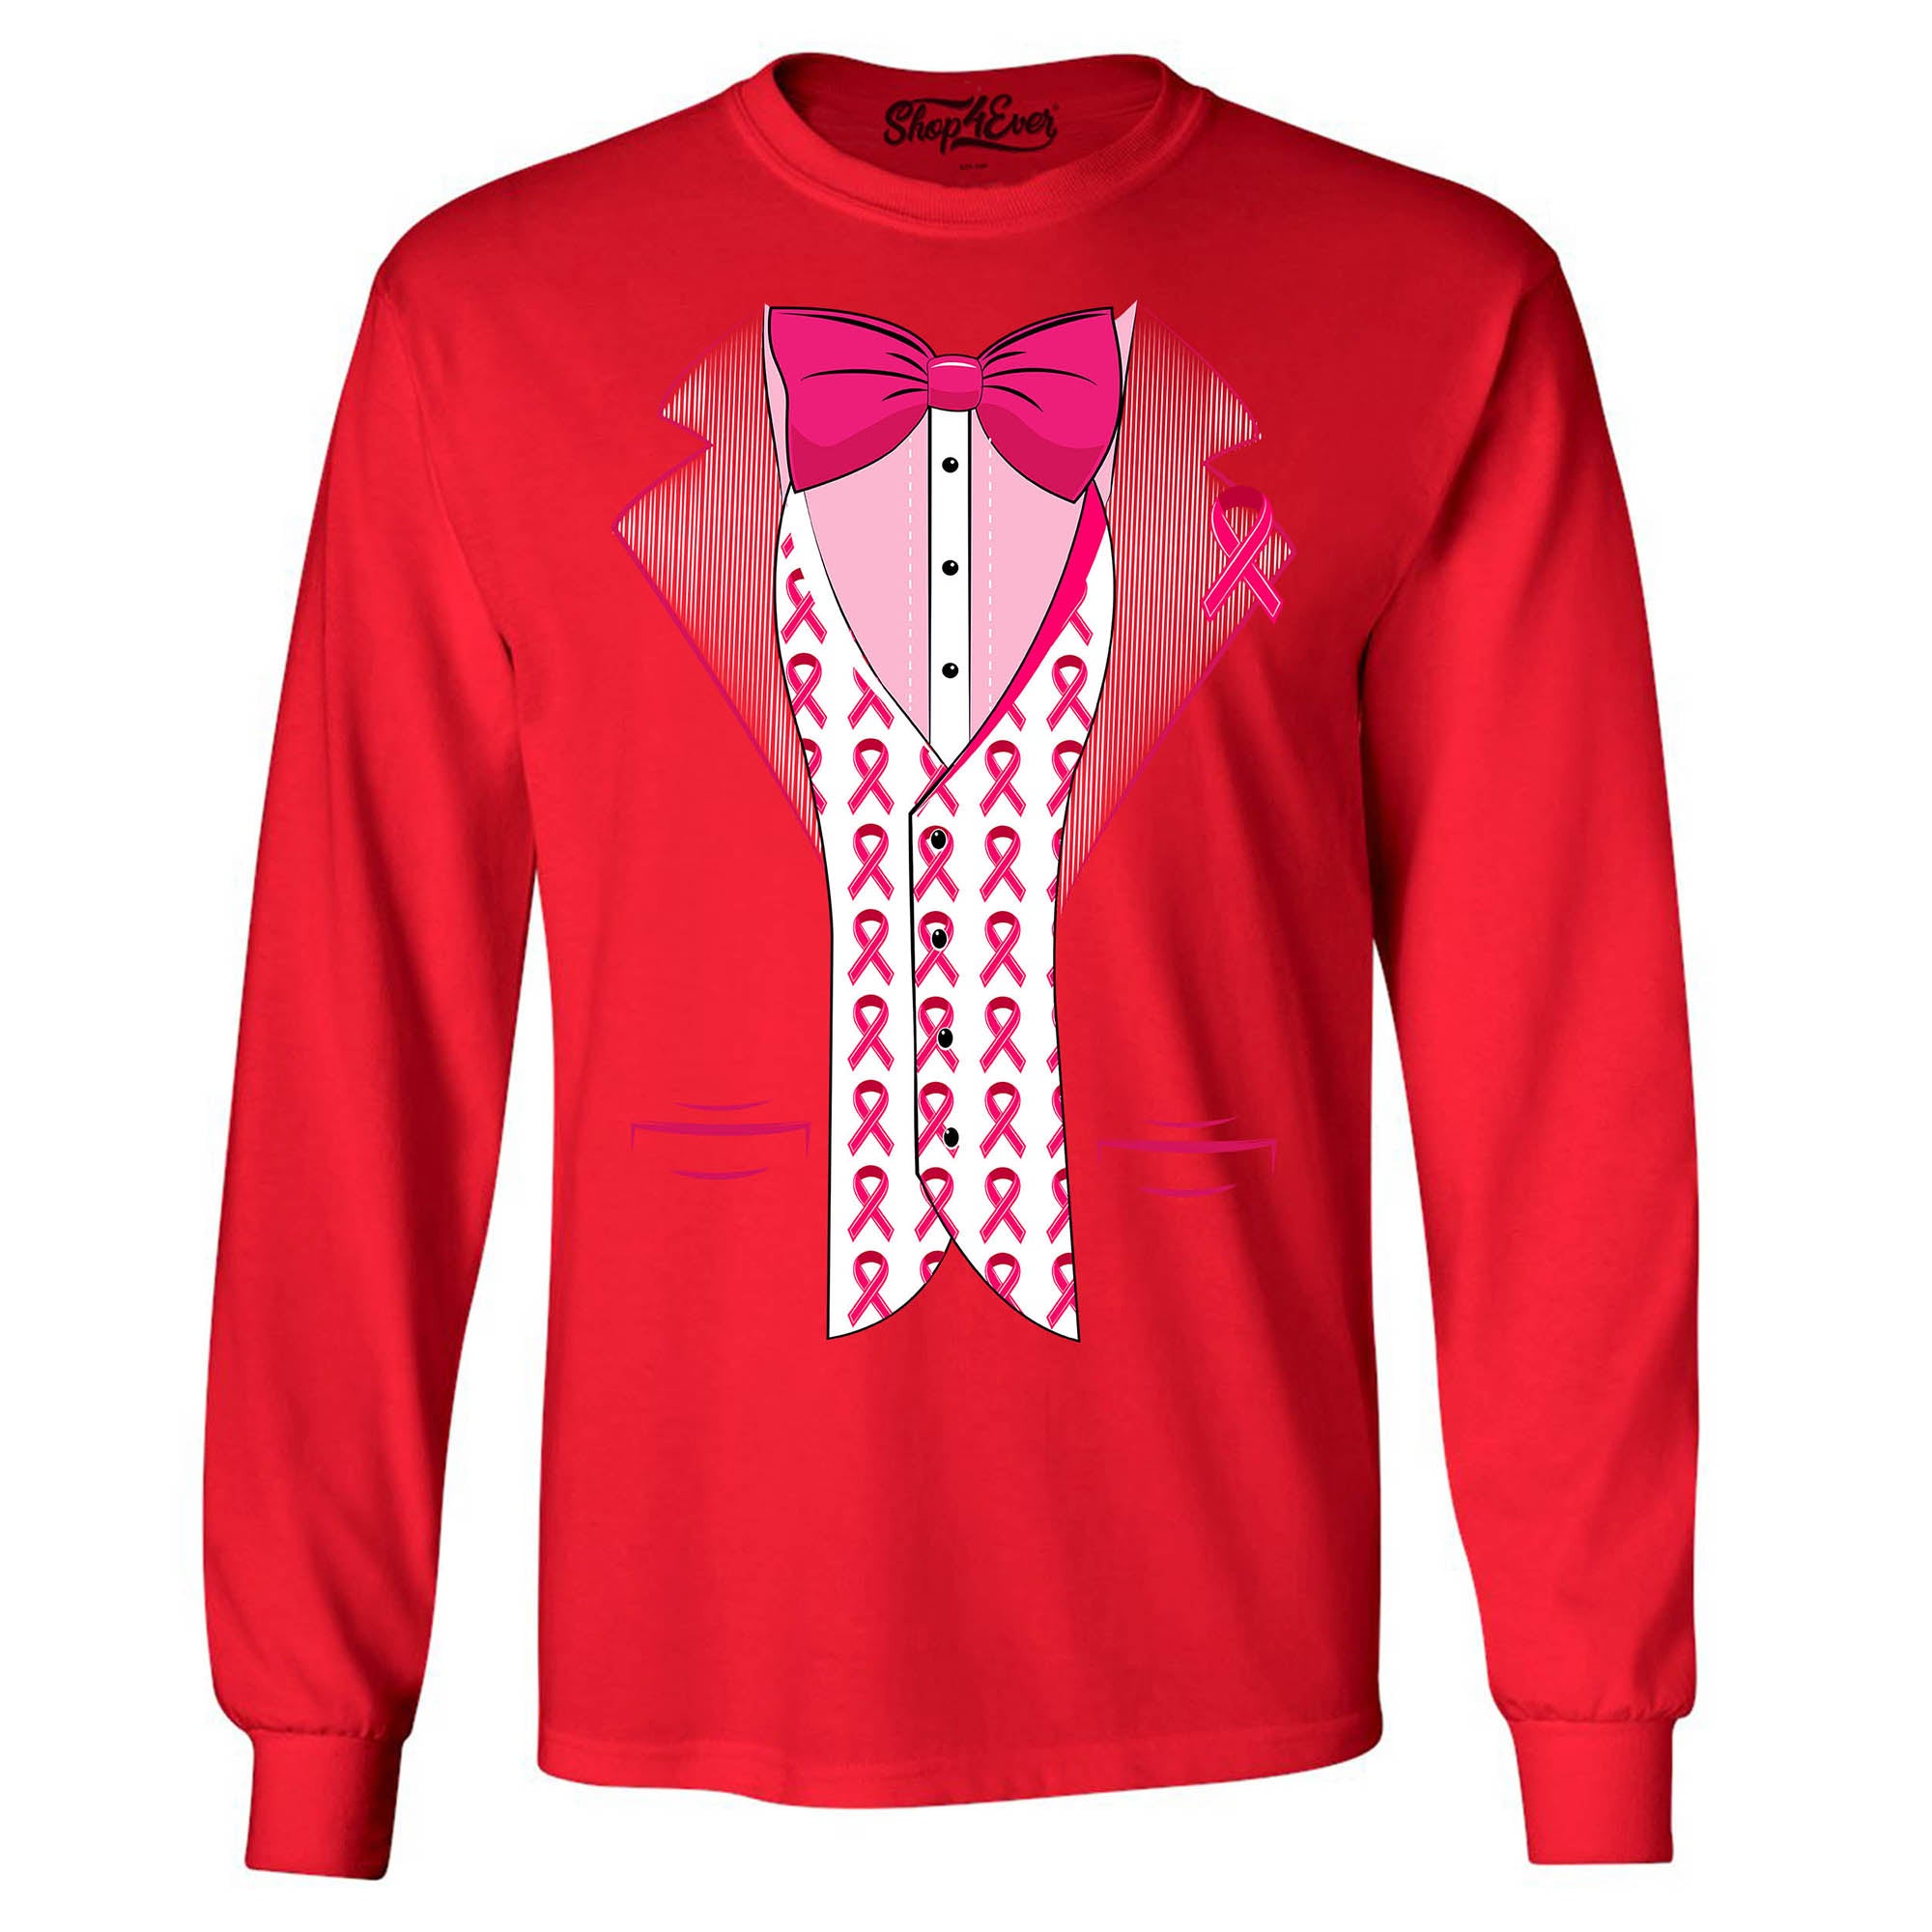 Breast Cancer Tuxedo Support Awareness Long Sleeve Shirt